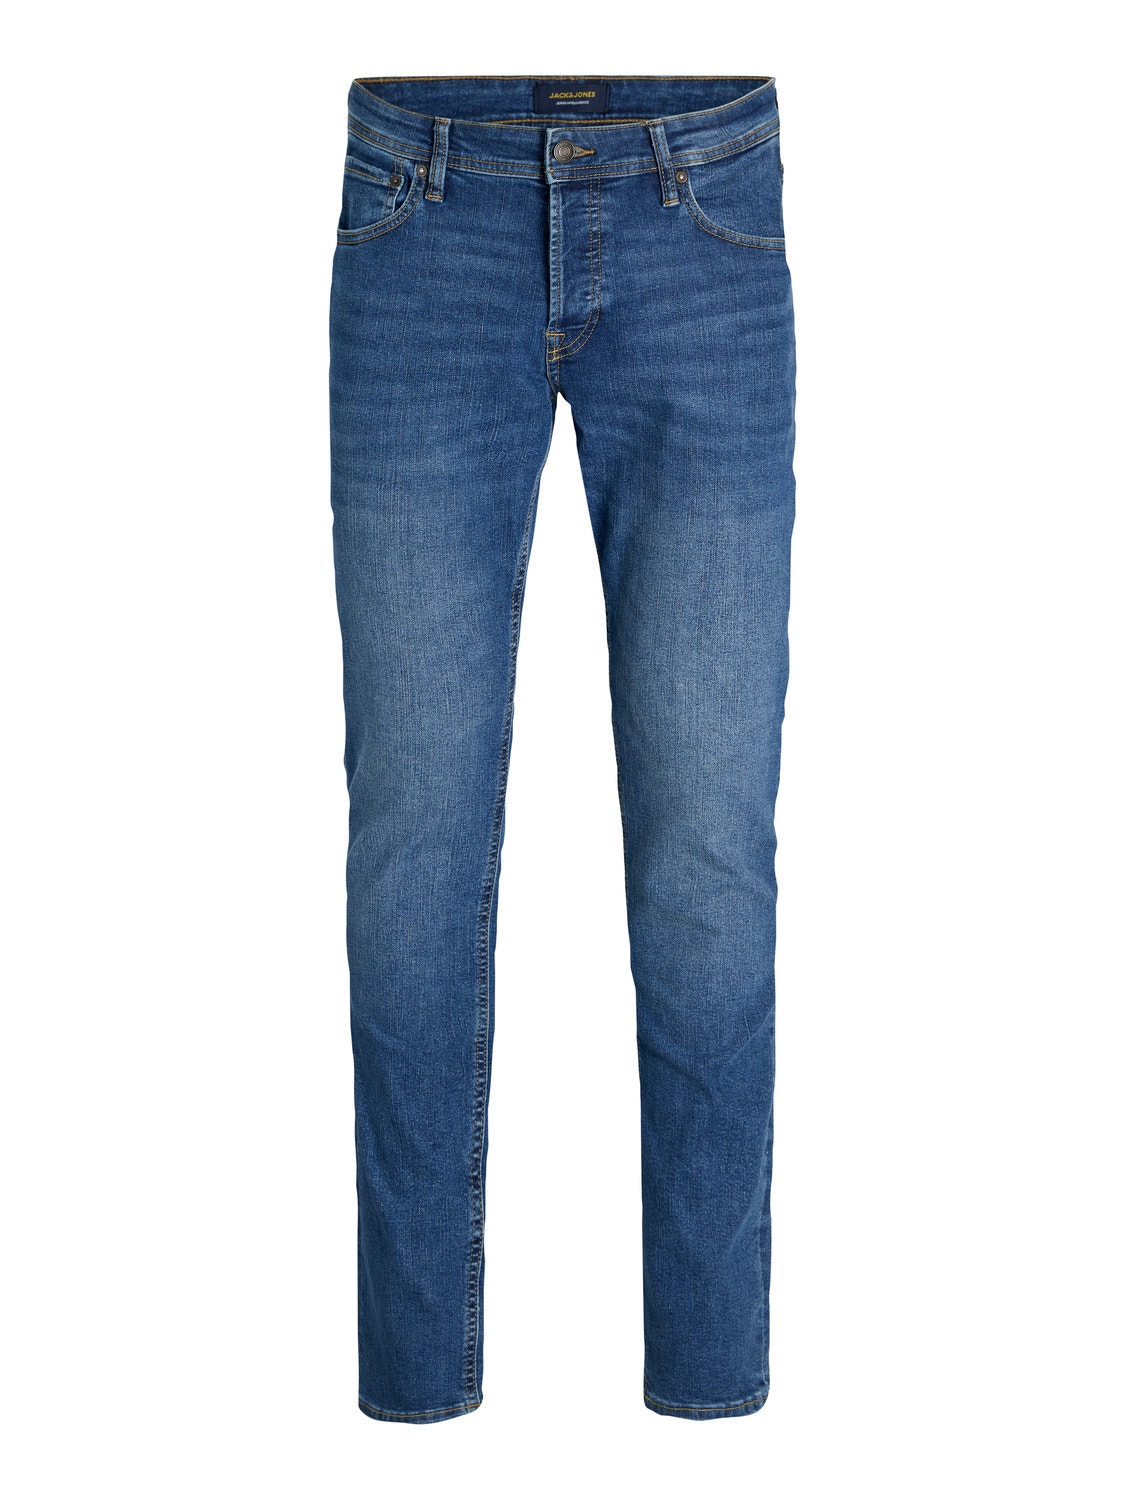 JJIGLENN JJORIGINAL SDL JJ 327 Slim fit jeans with 10% discount! | Jack ...